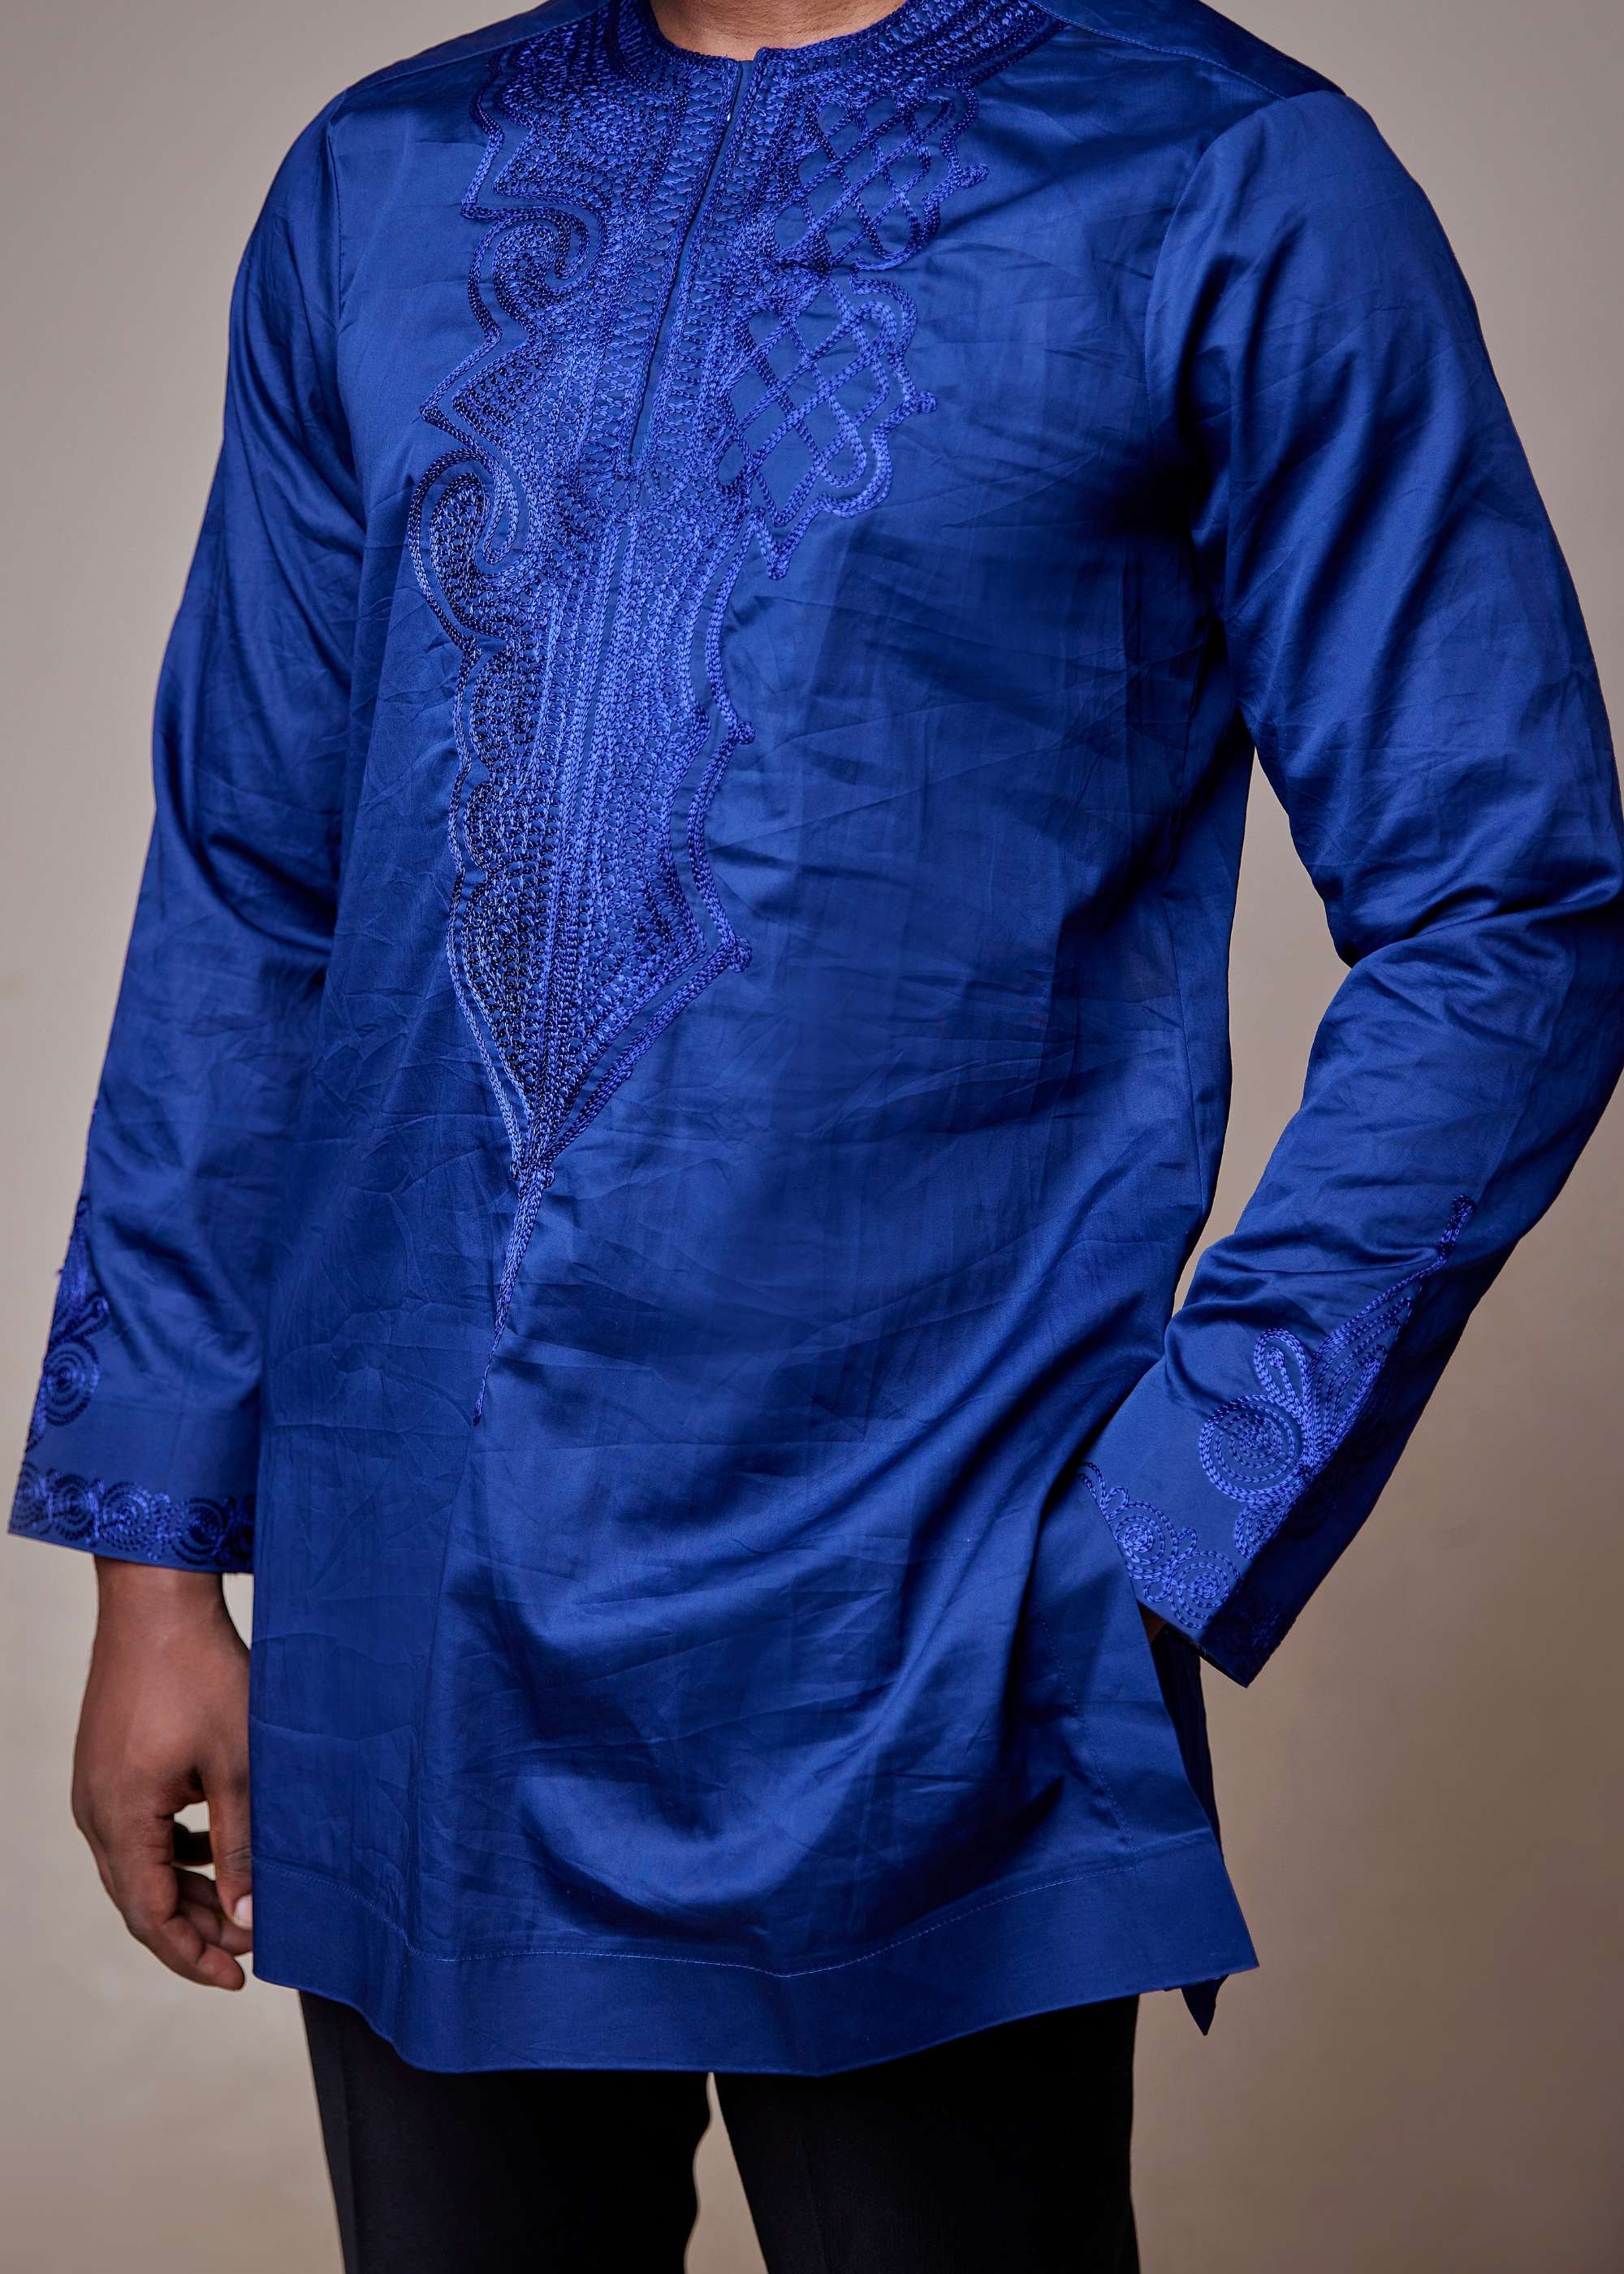 Oloye Embroidered Shirt (Light Blue)